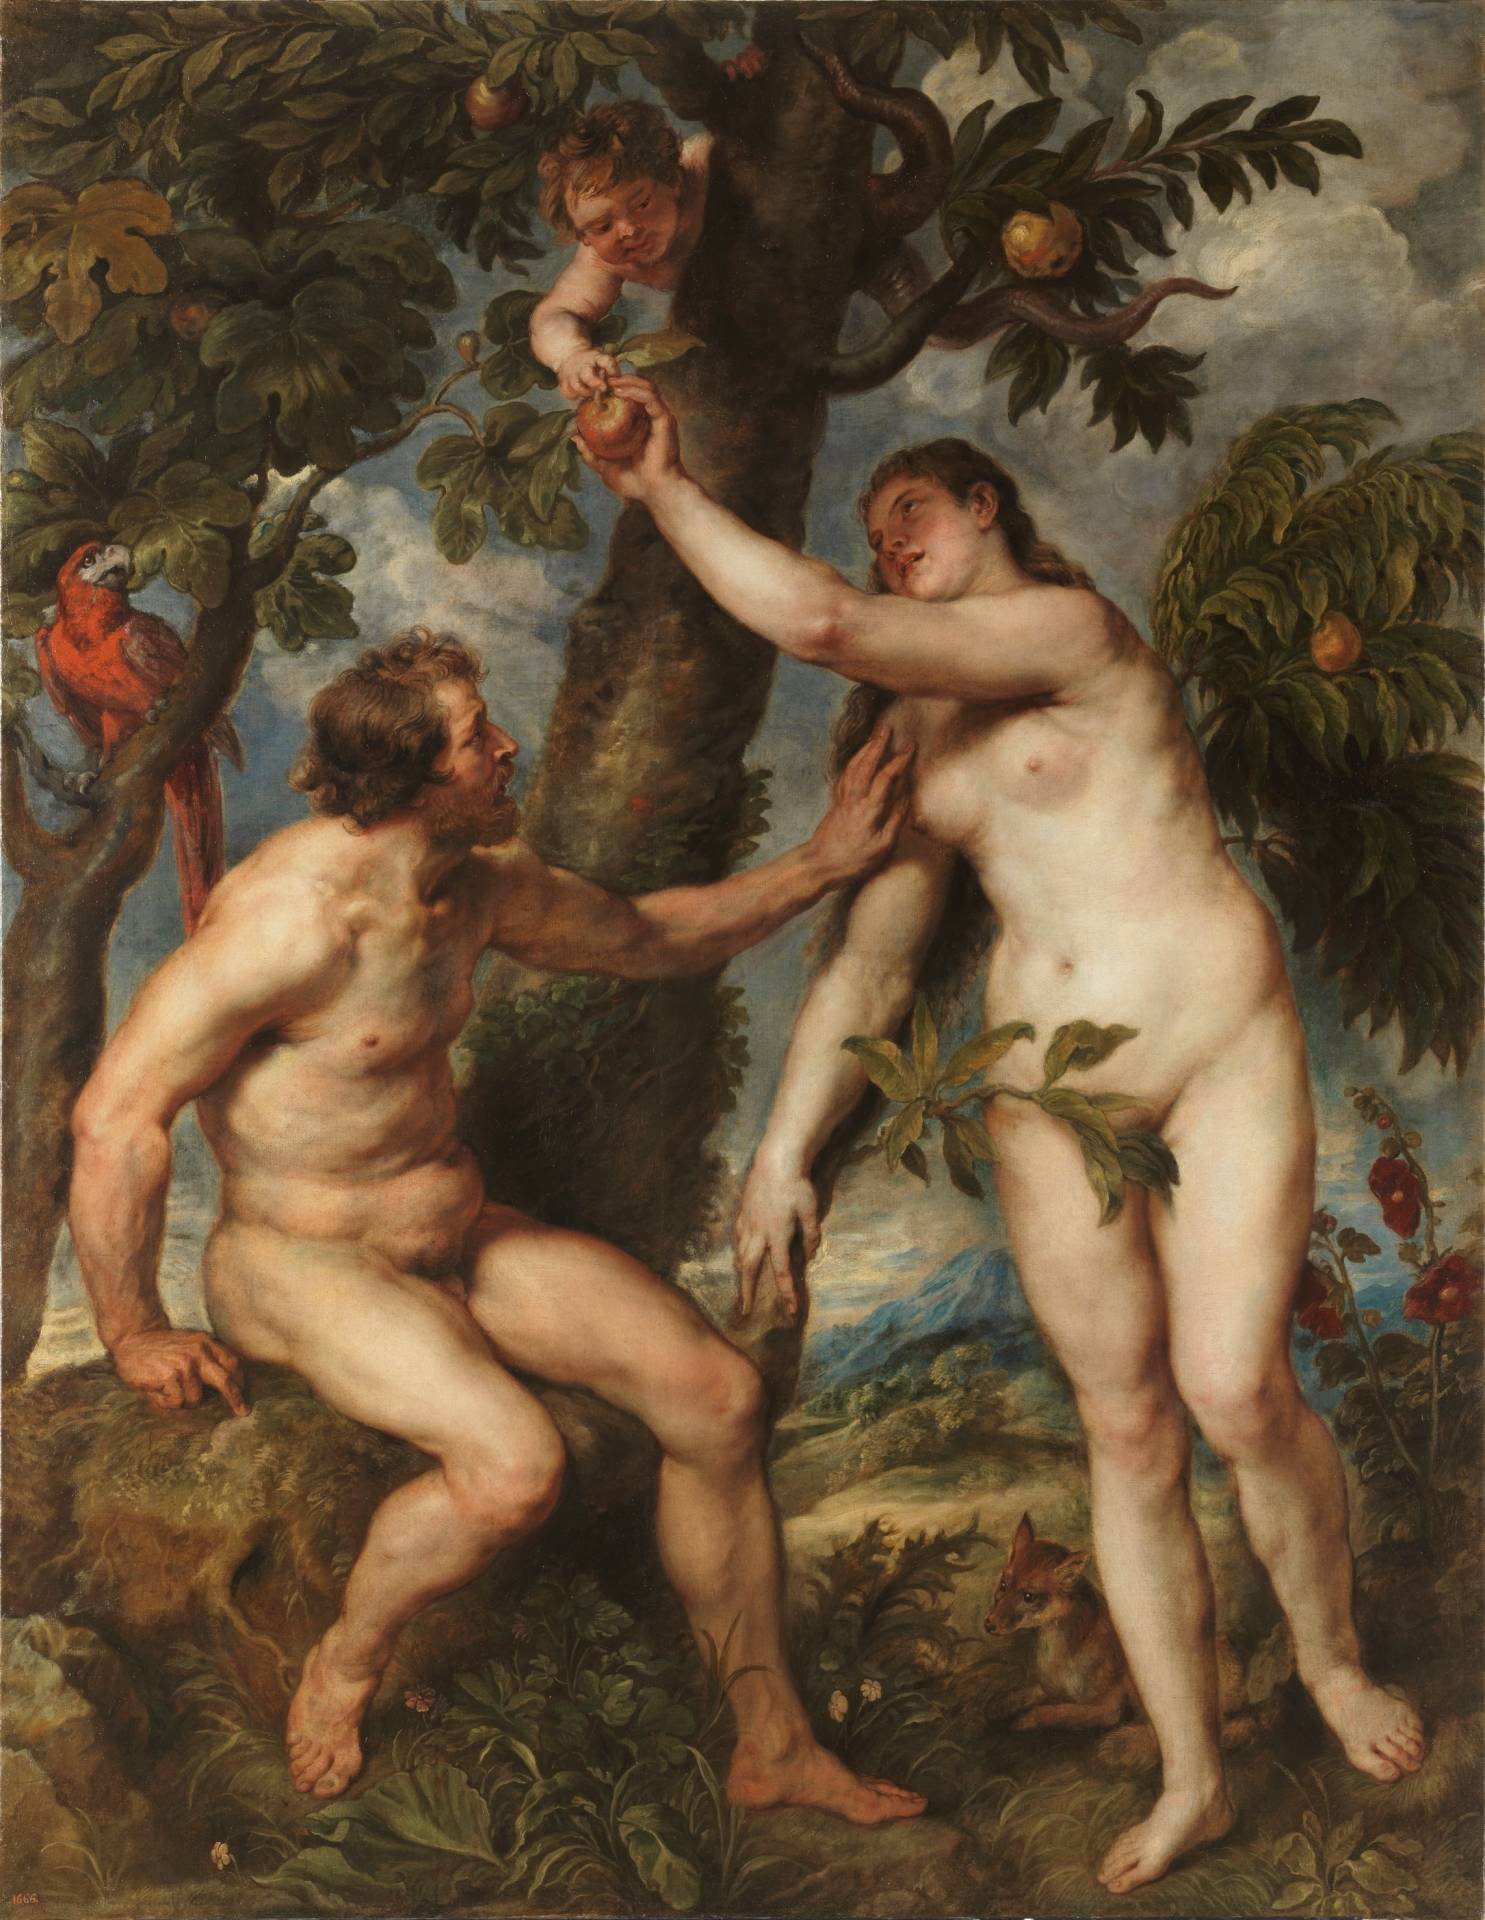 Peter Paul Rubens (1628 and 1629)